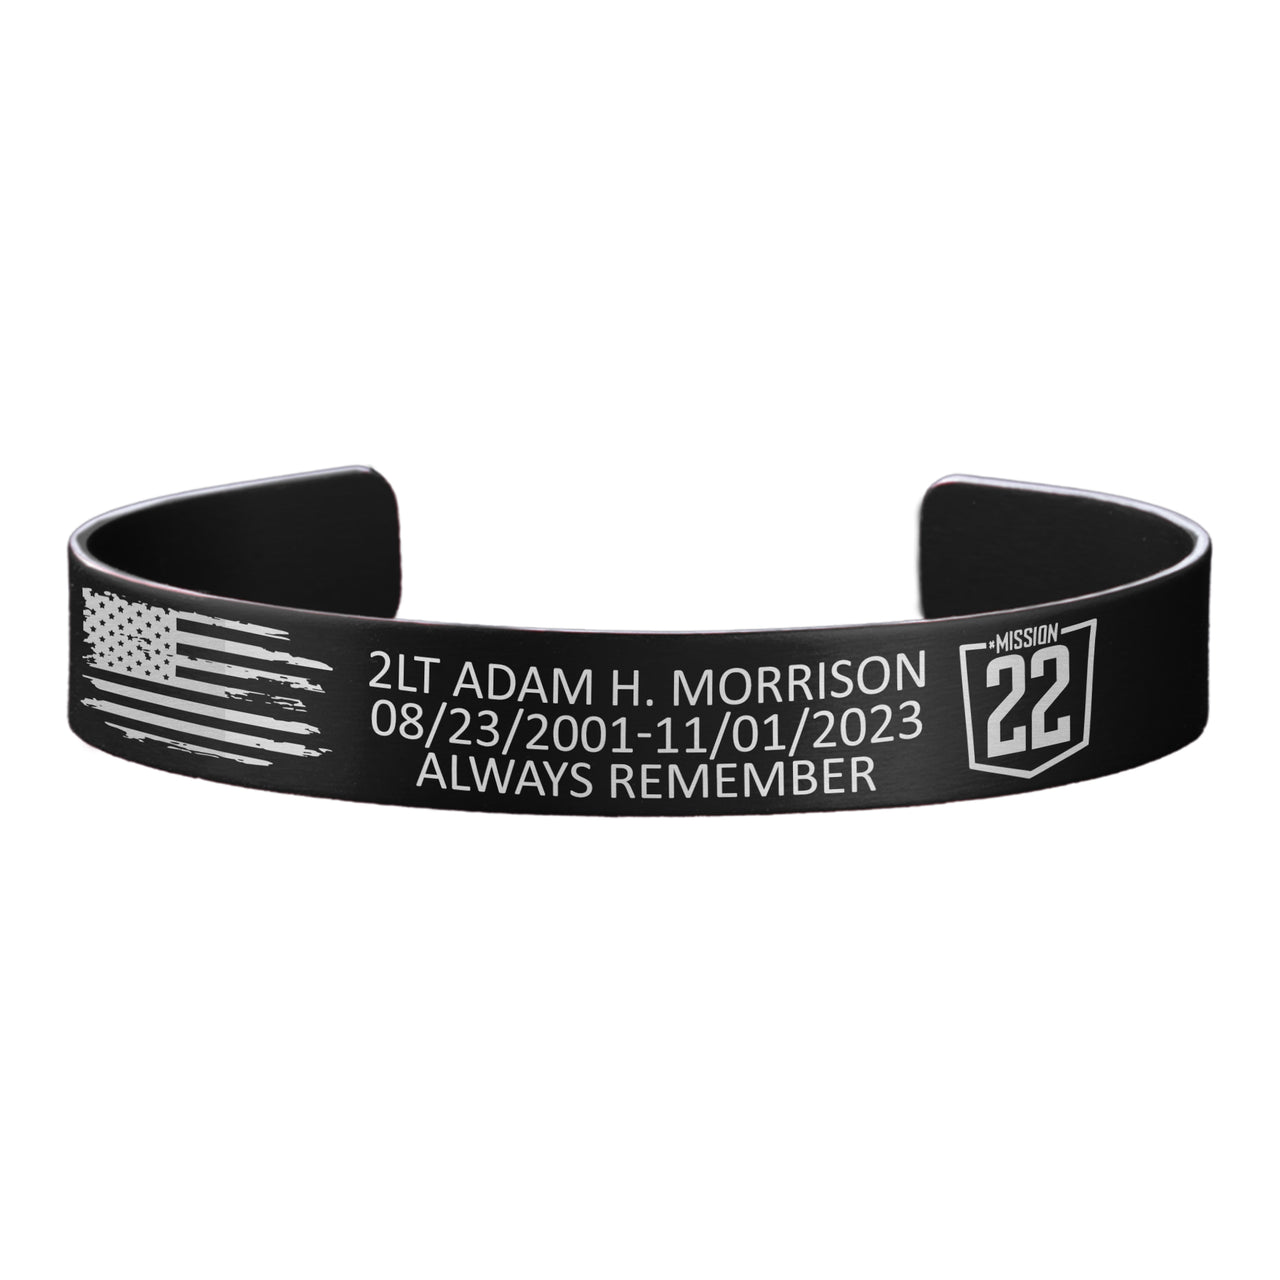 2LT Adam H. Morrison Memorial Band – Hosted by the Morrison Family